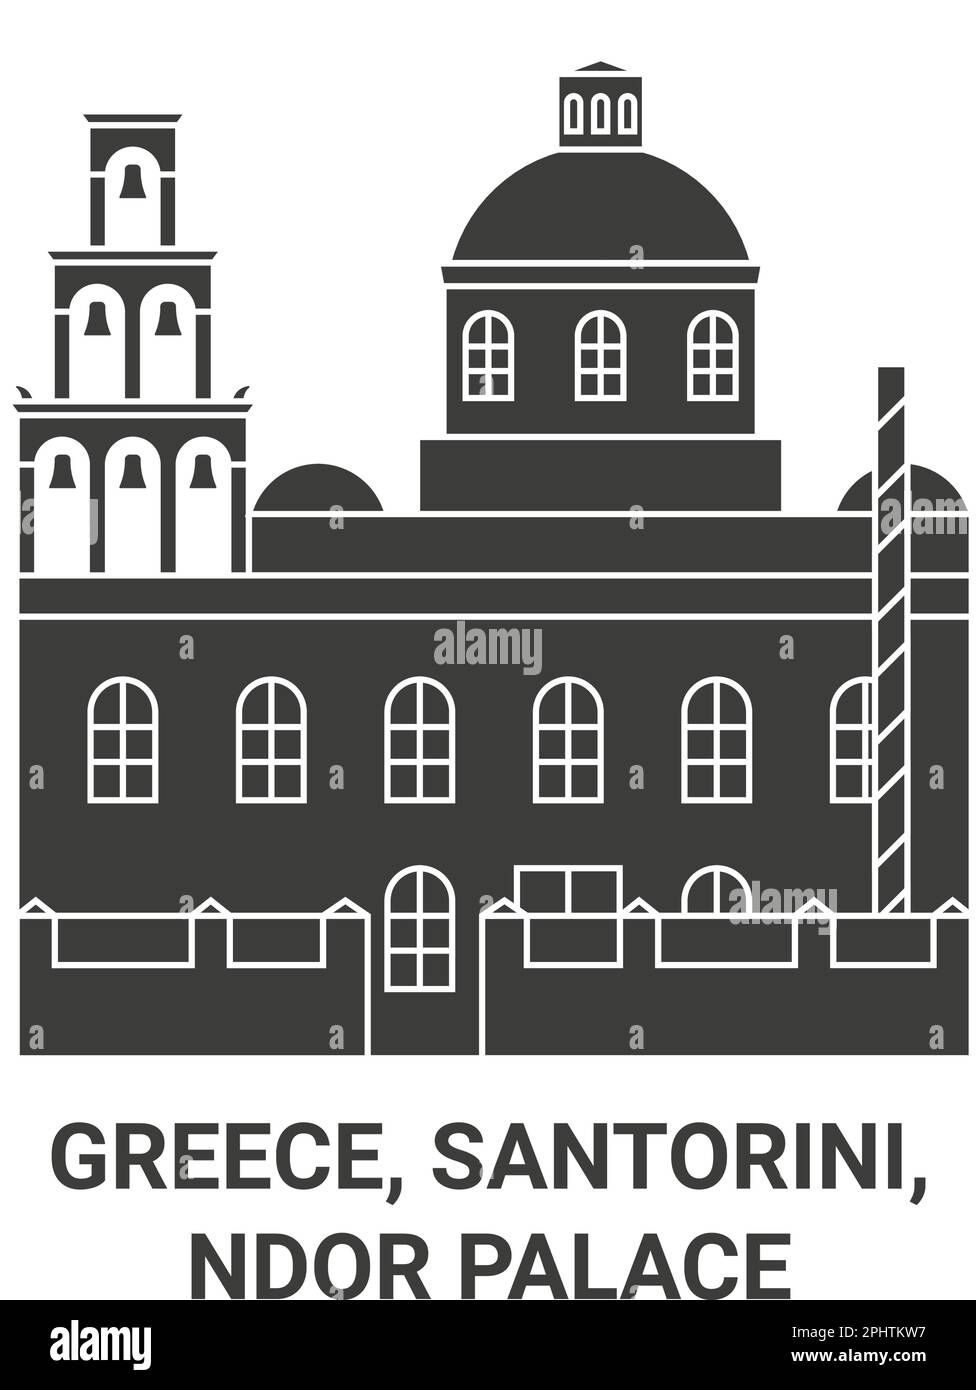 Greece, Santorini, Sndor Palace travel landmark vector illustration Stock Vector